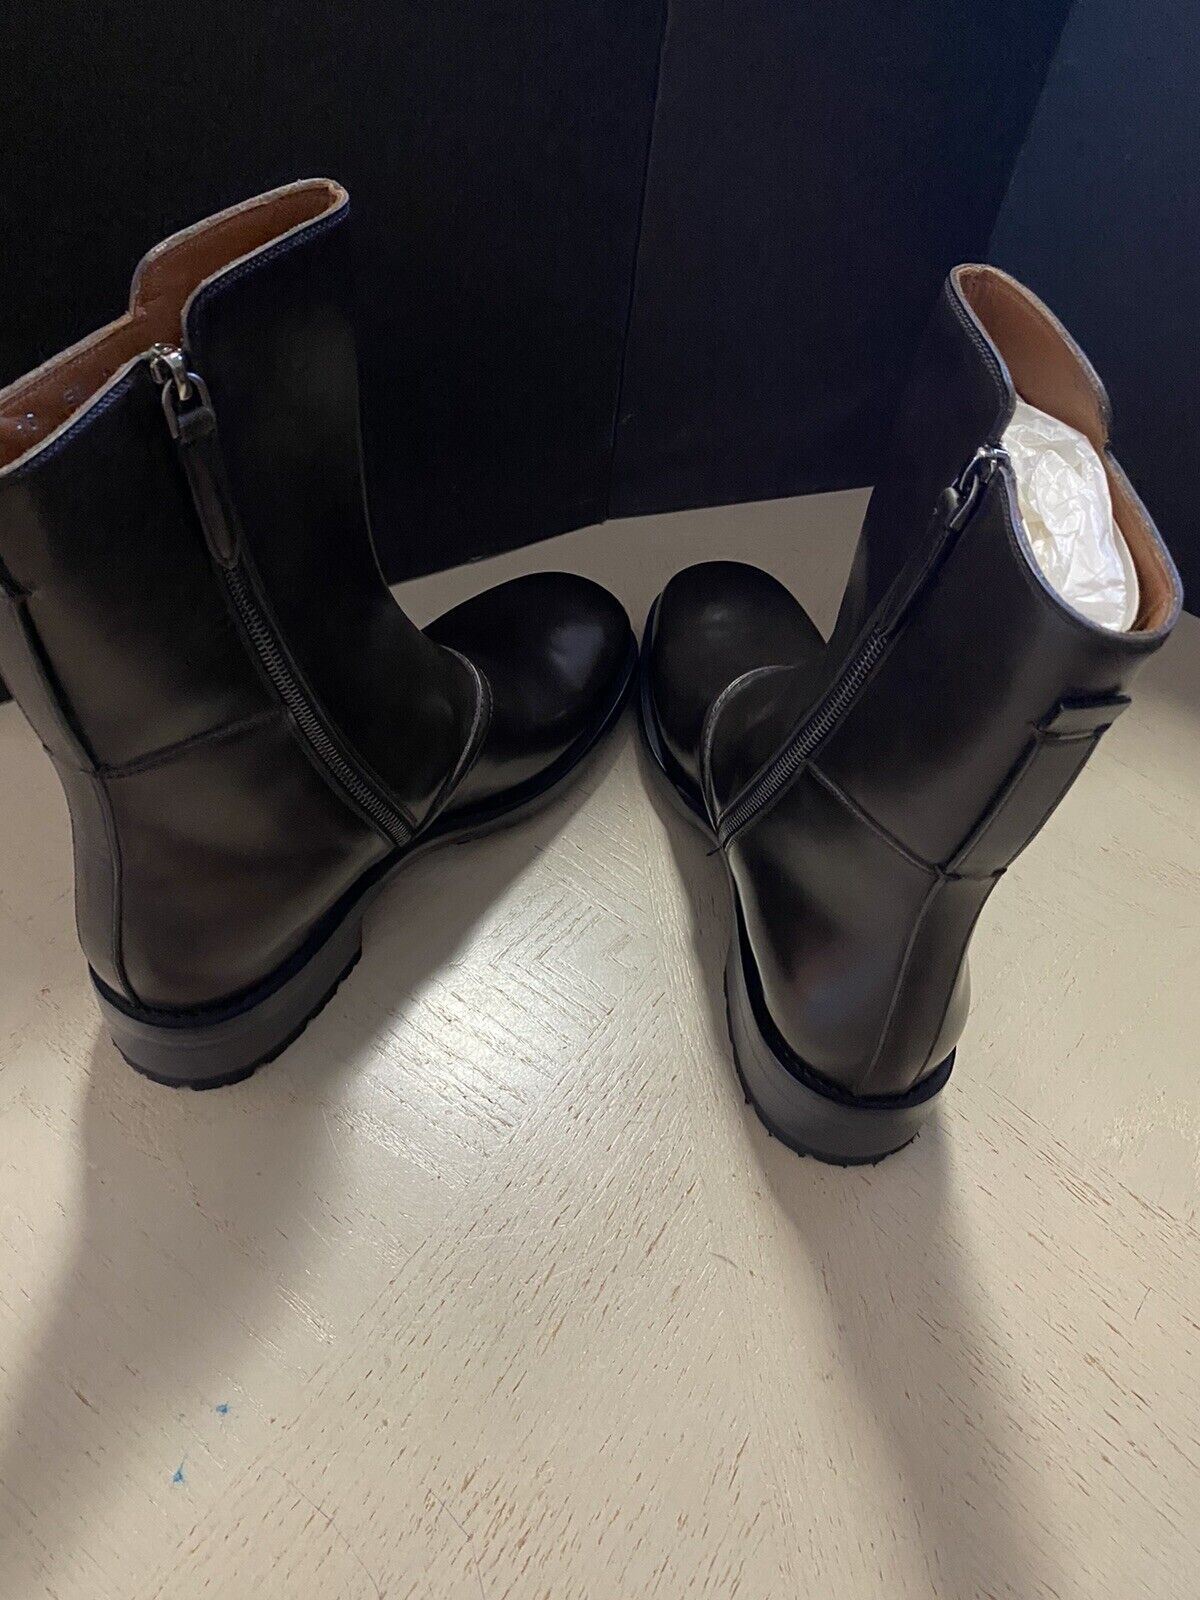 New $1595 Ermenegildo Zegna Couture Calfskin Leather Boots Shoes DK Brown 11 US